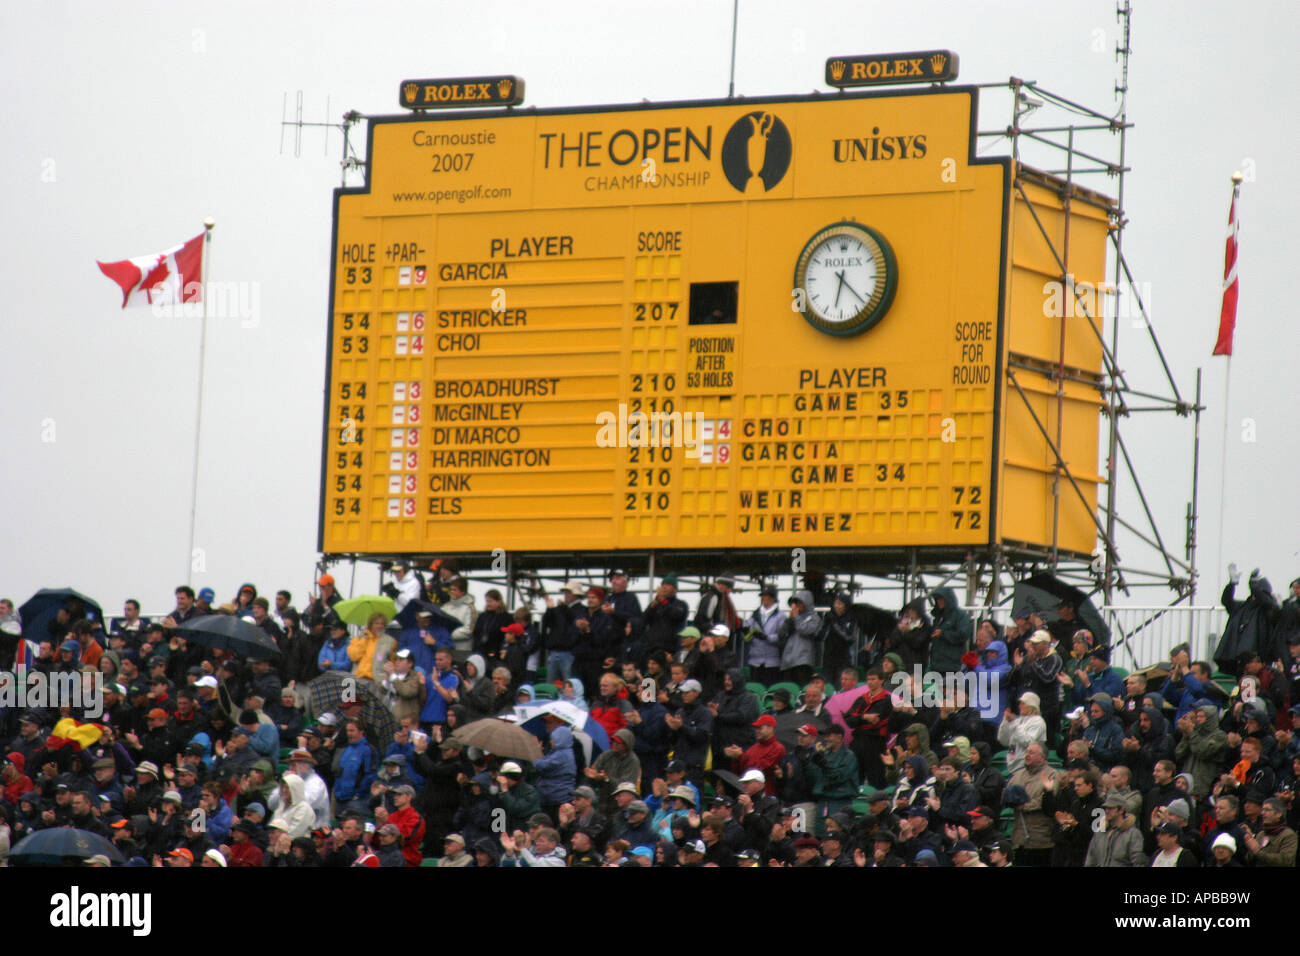 Campeonato abierto de golf scoreboard Foto de stock